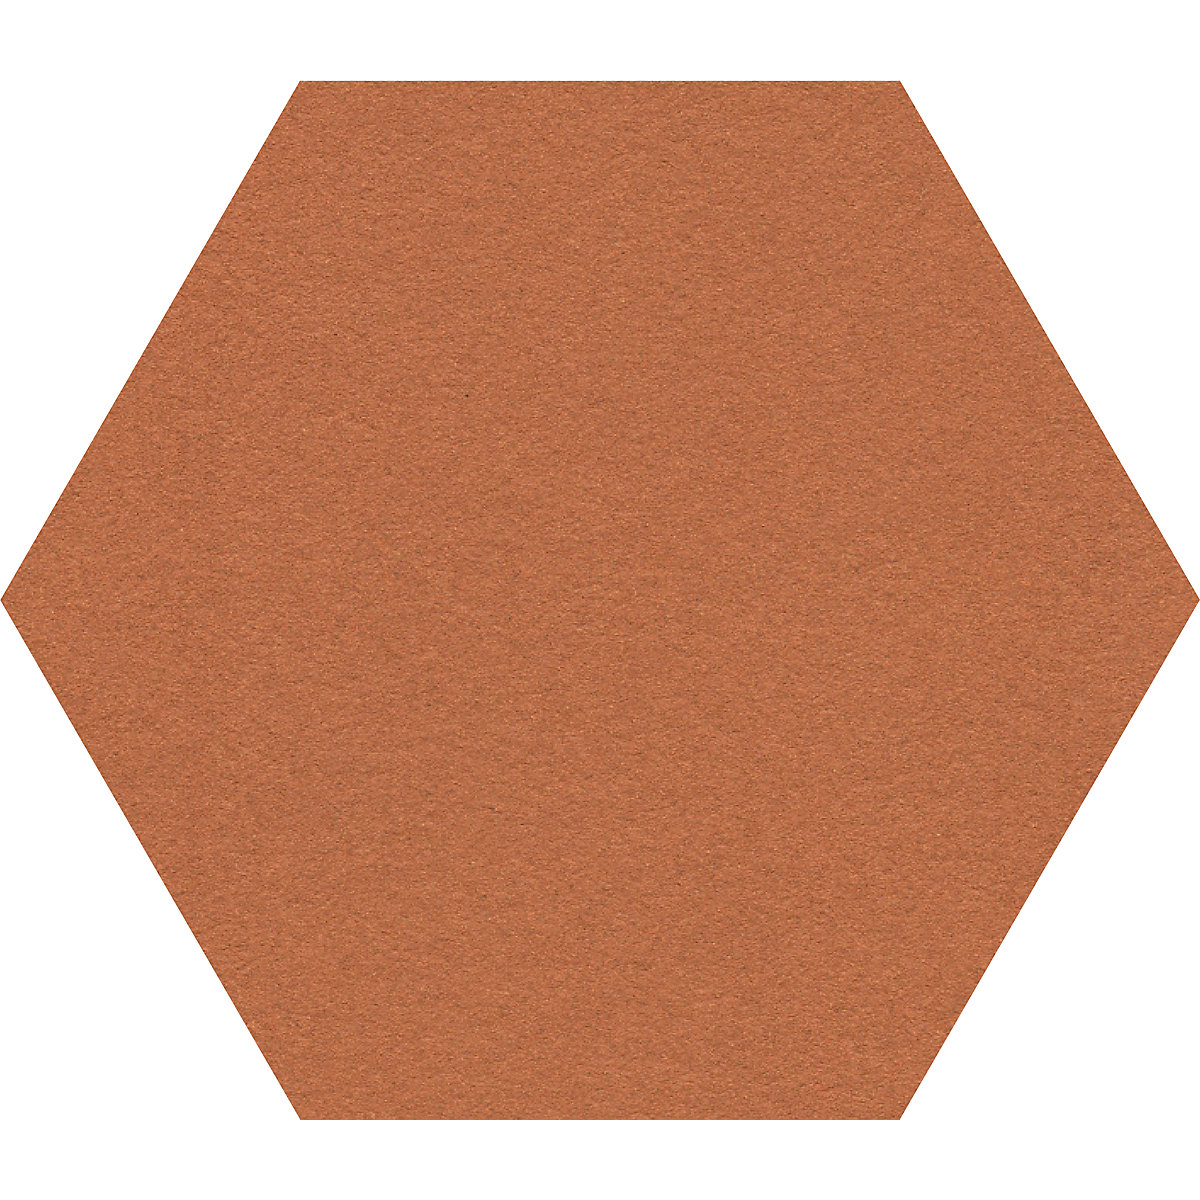 Quadro de pinos com design hexagonal – Chameleon, cortiça, LxA 600 x 600 mm, cognac-35